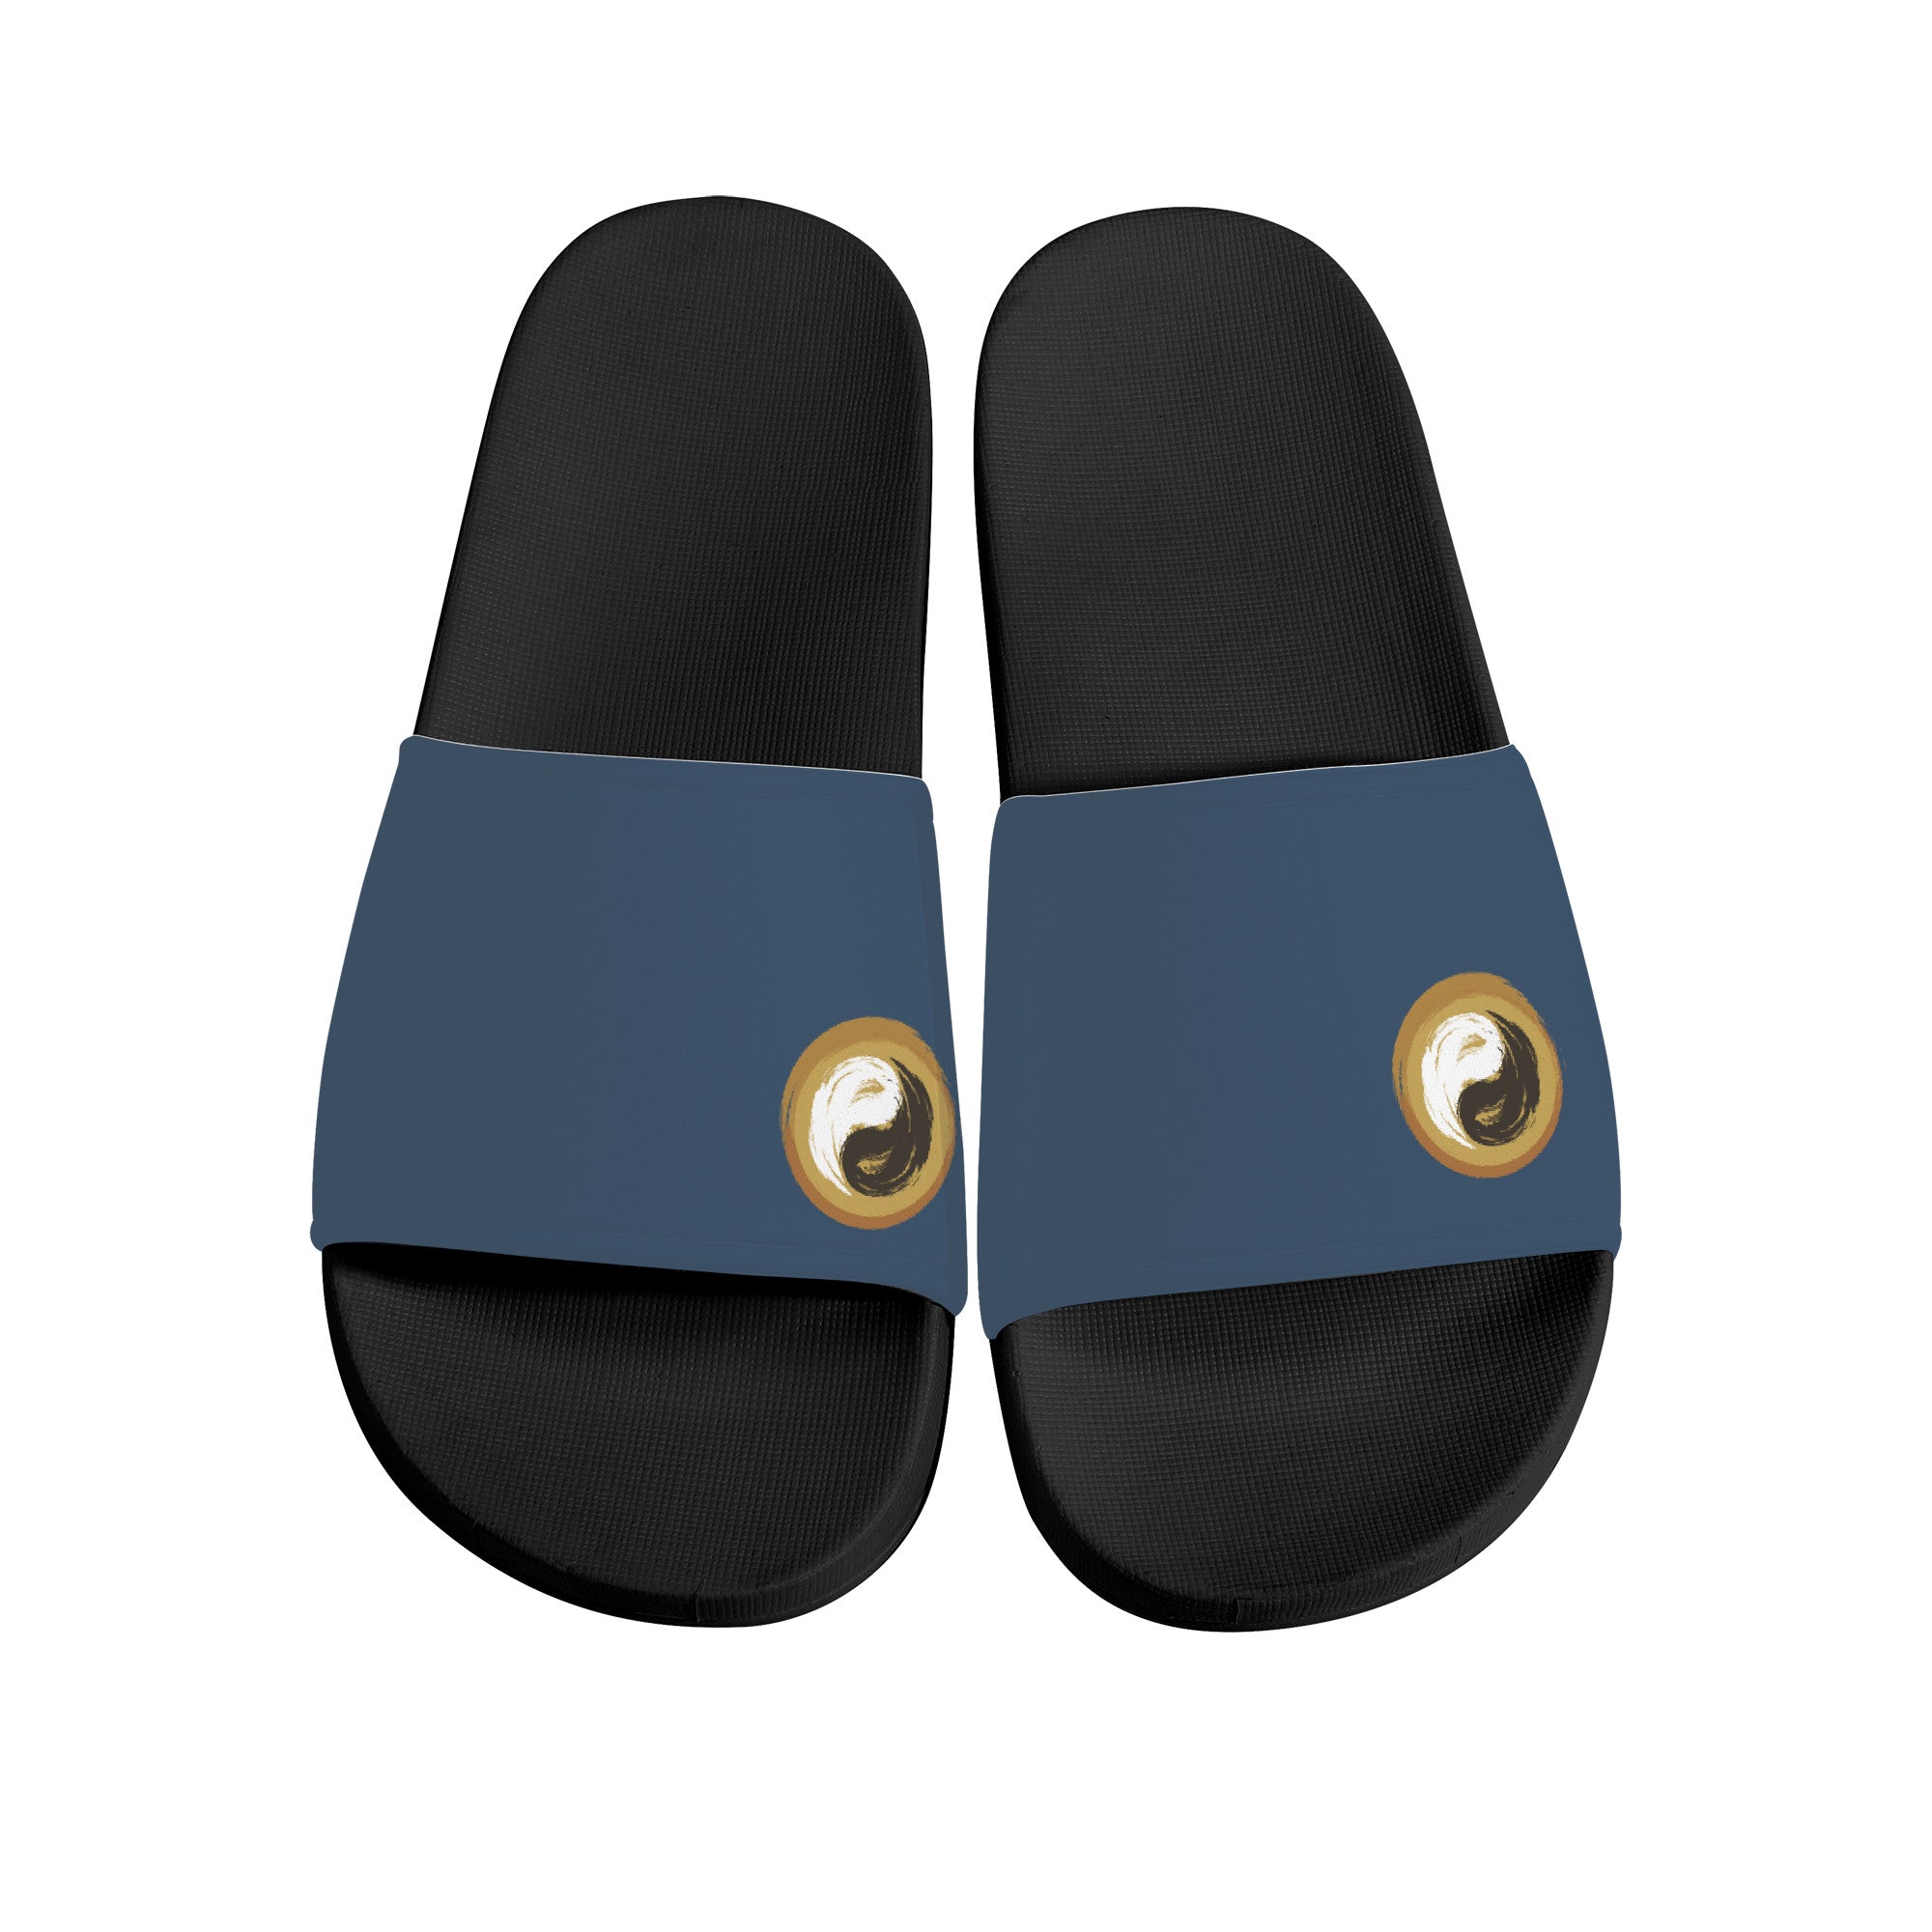 Yoga Sandals - Sanuk flip flops -  open-toe style sandals